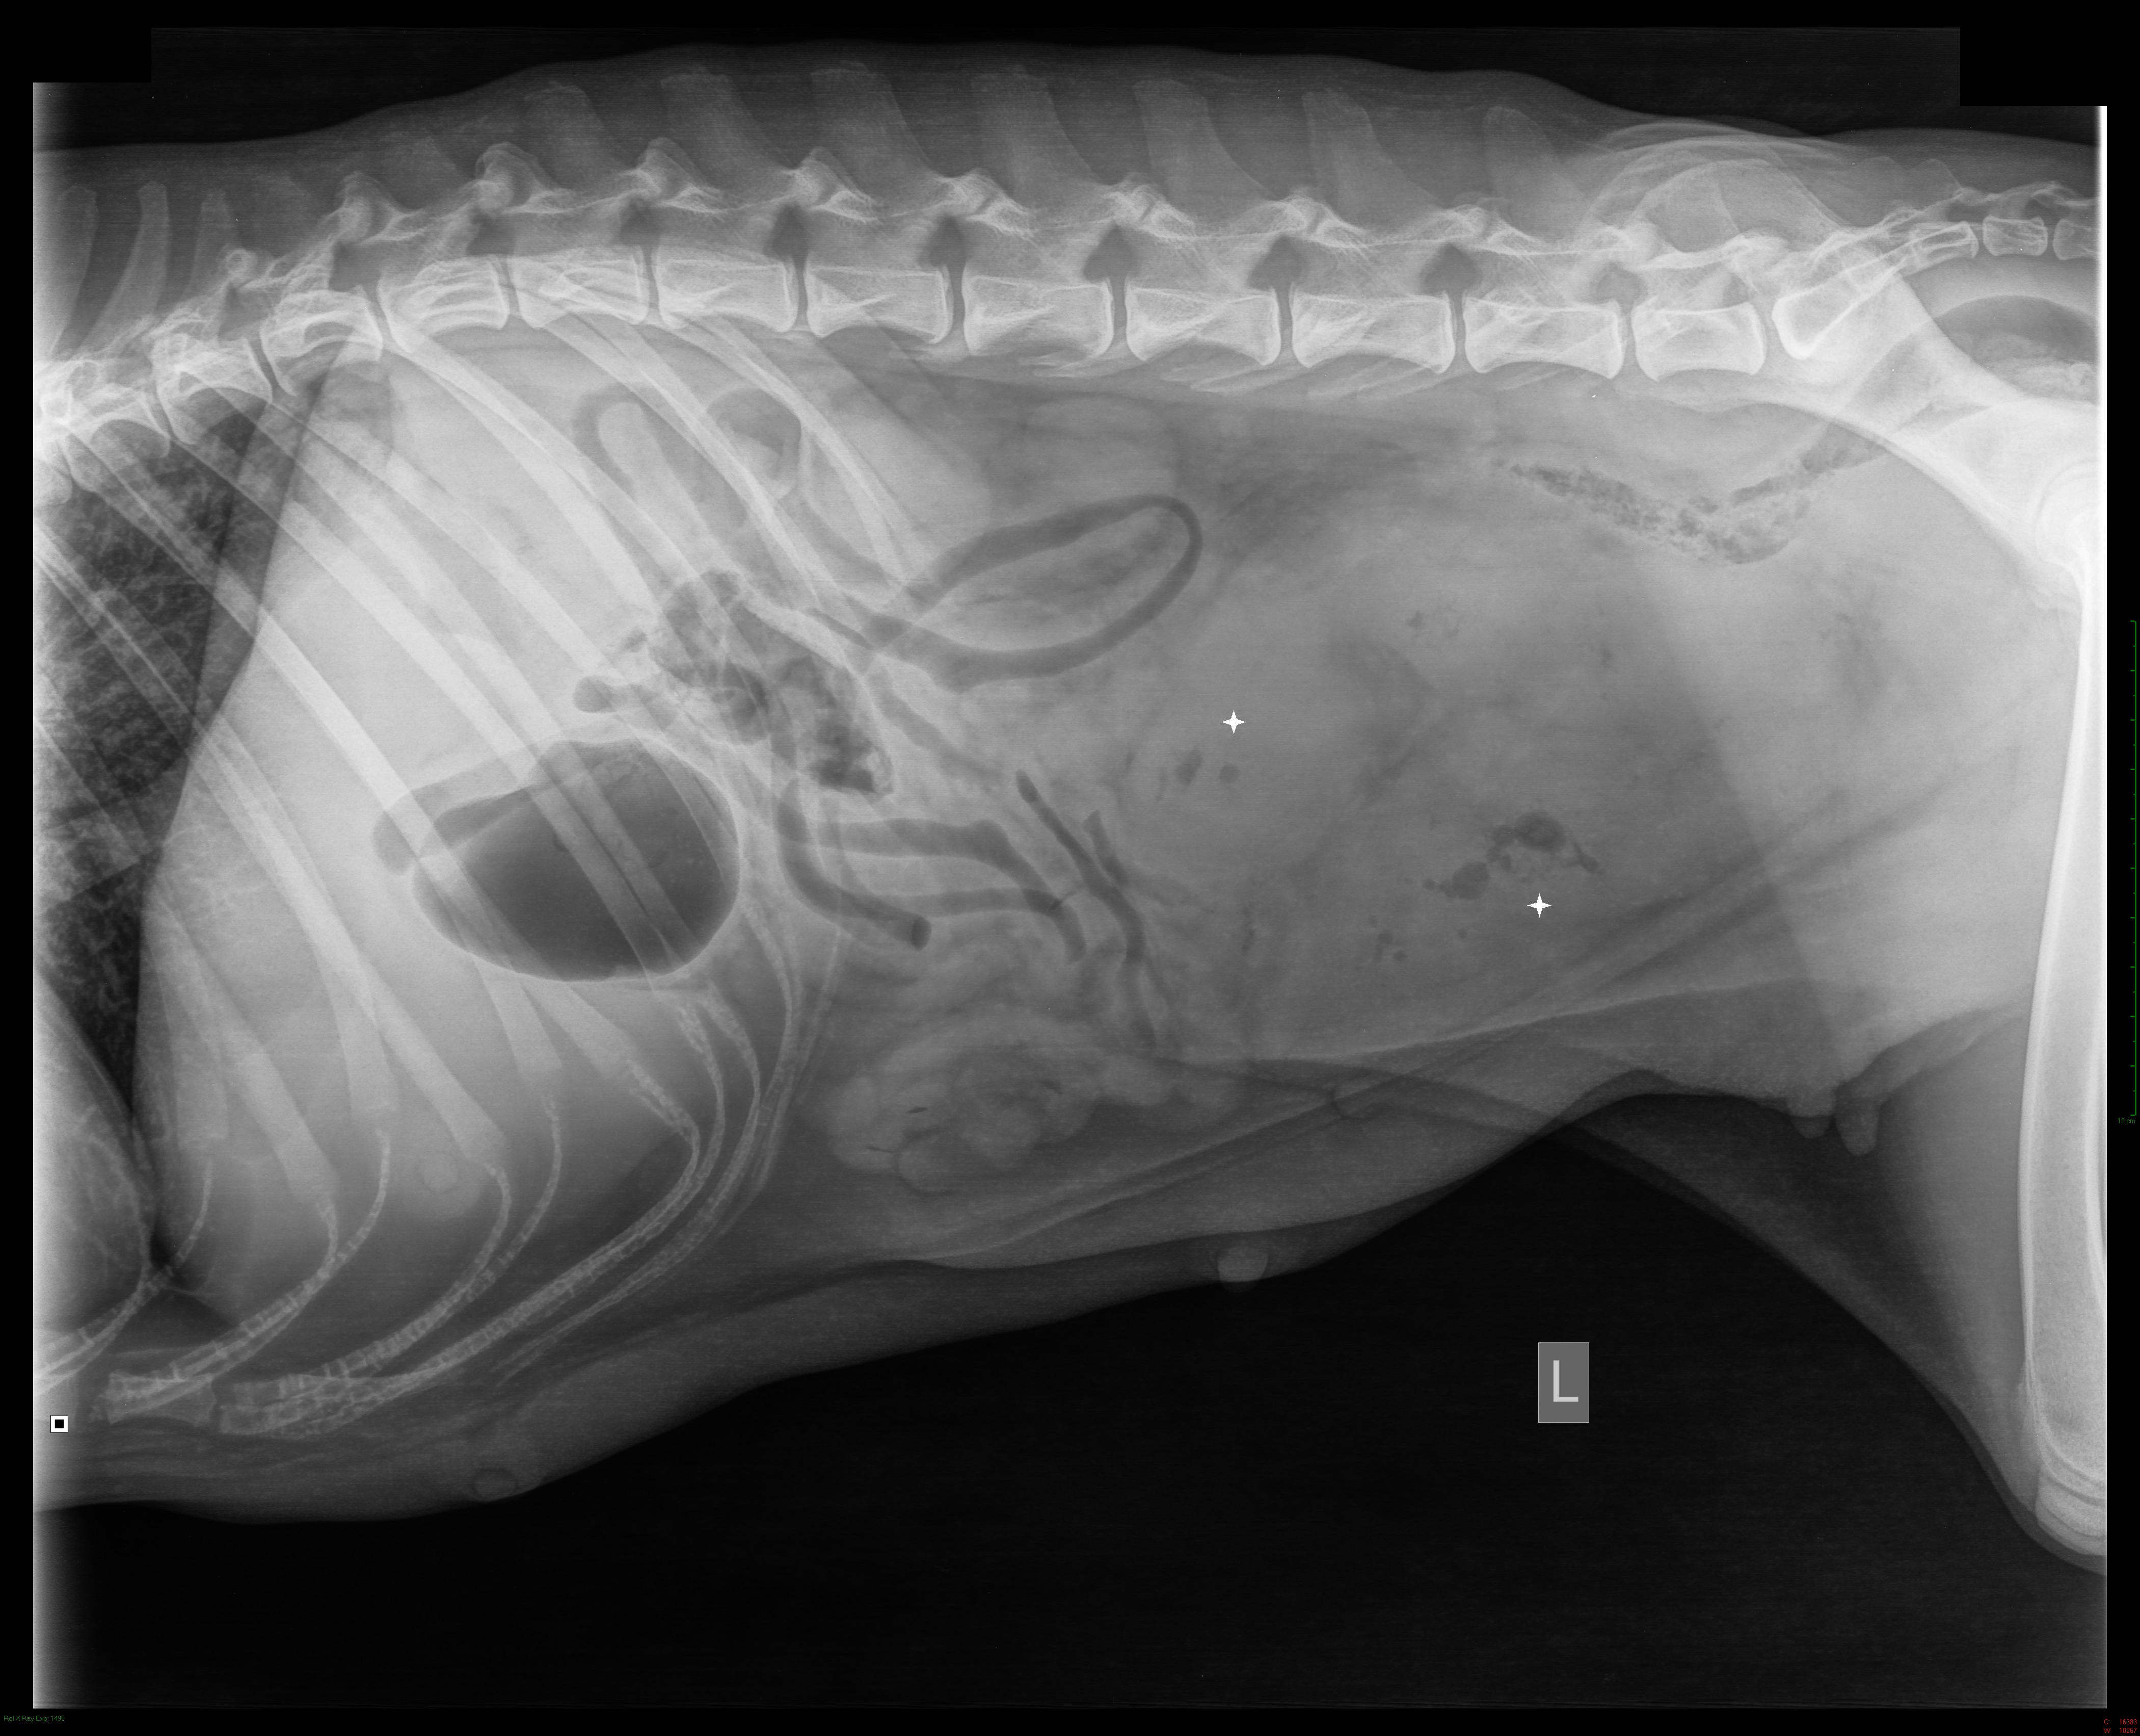 radiograph of dog abdomen showing placenta percreta